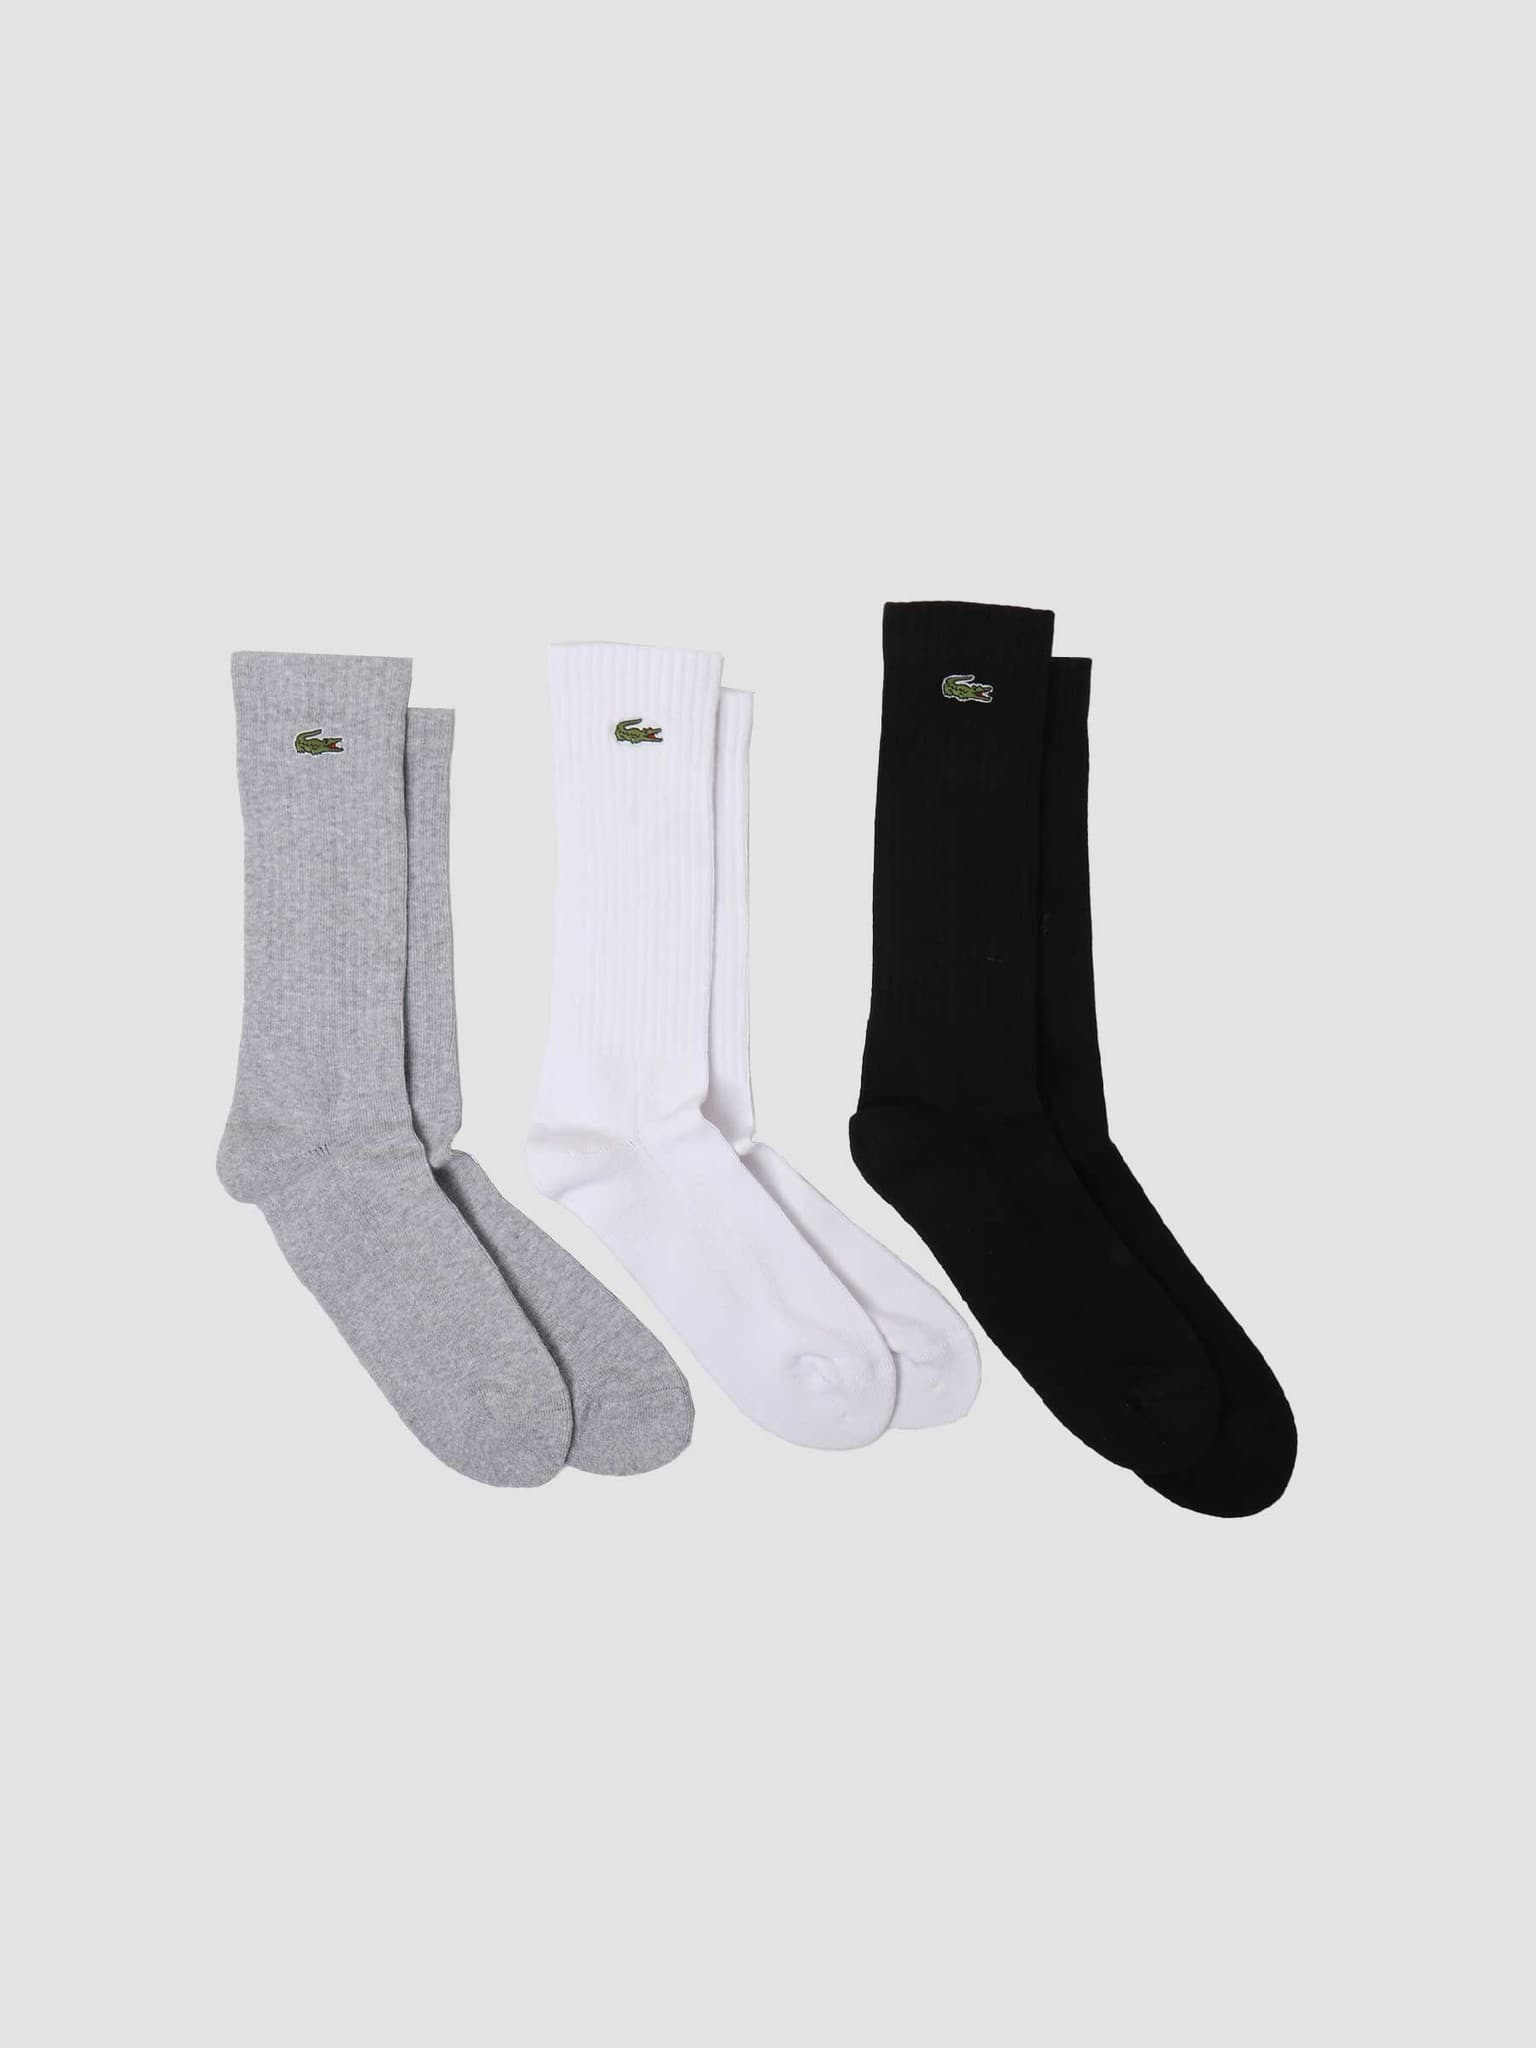 2G1C Socks 11 Silver Chine White Black RA2099-11